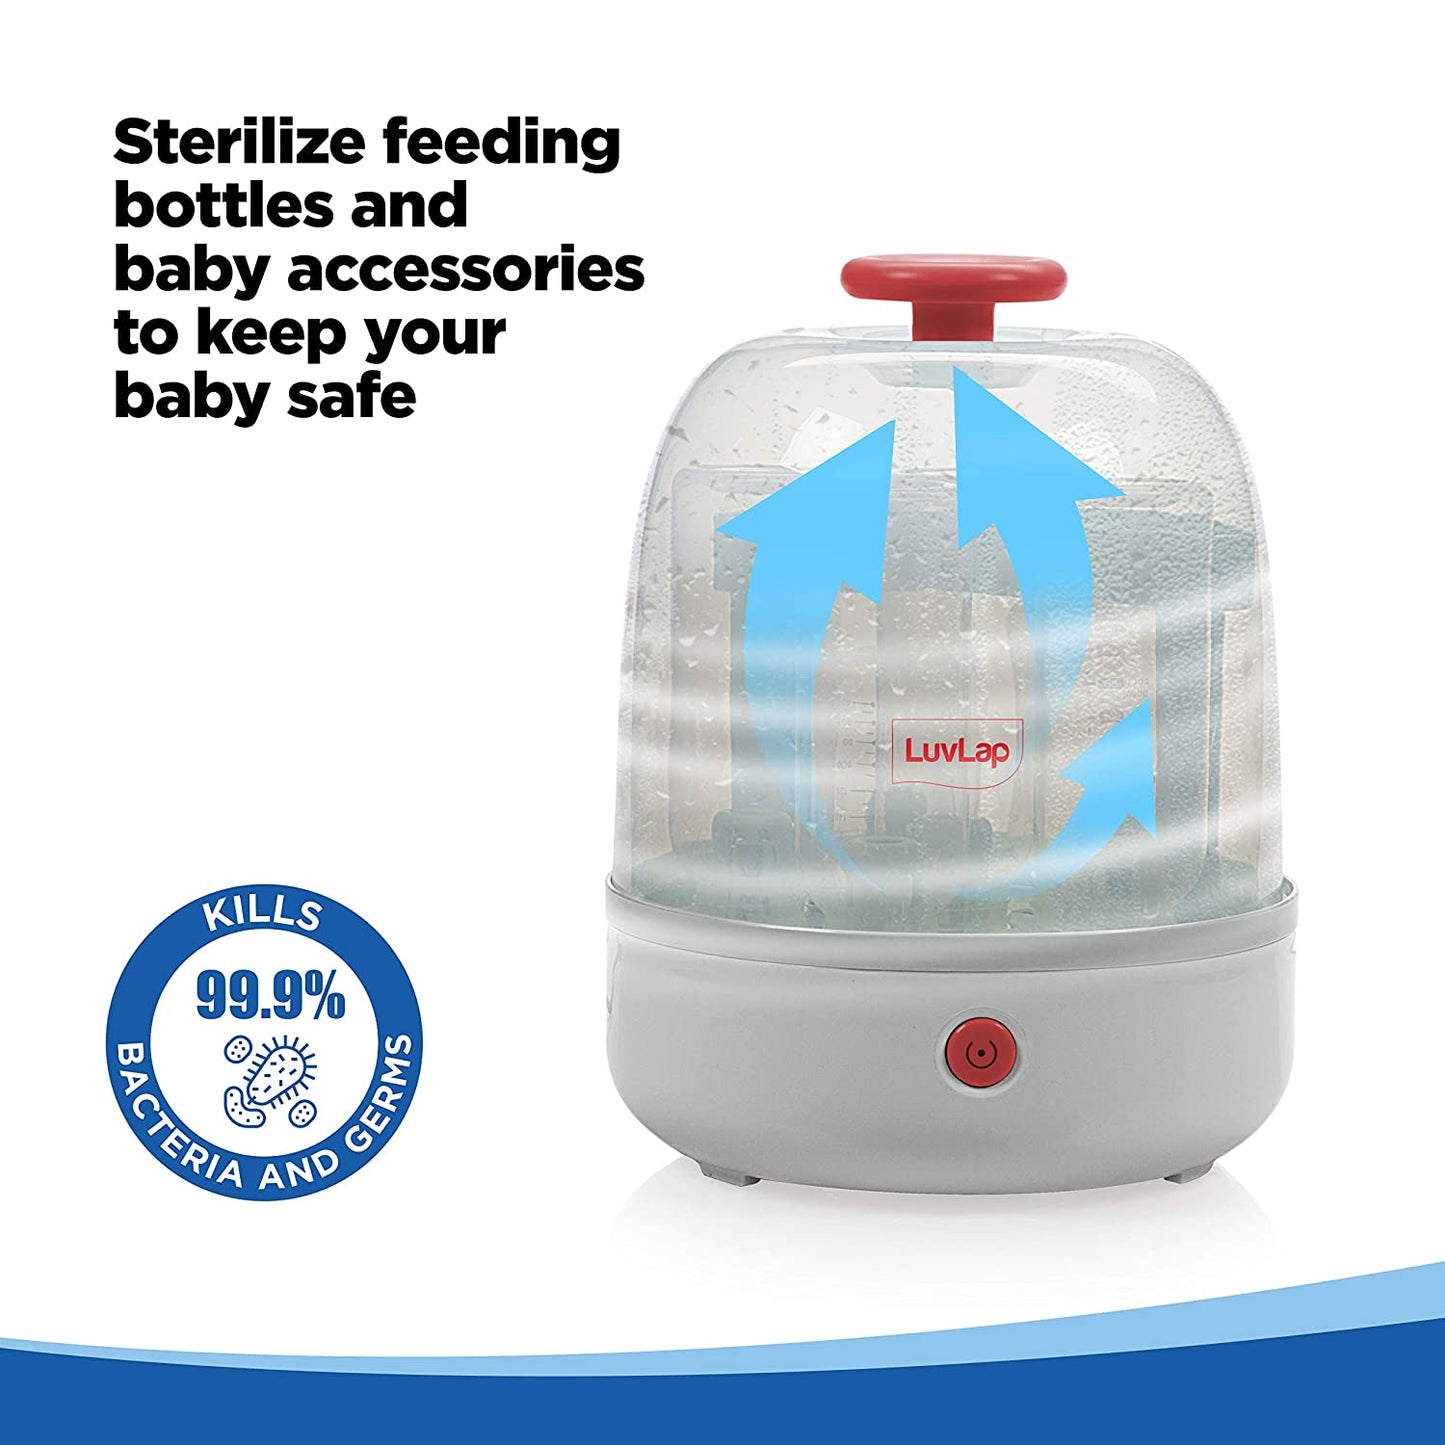 Joy Electric Steam Sterilizer for 6 feeding bottles, BPA Free, Medium, White